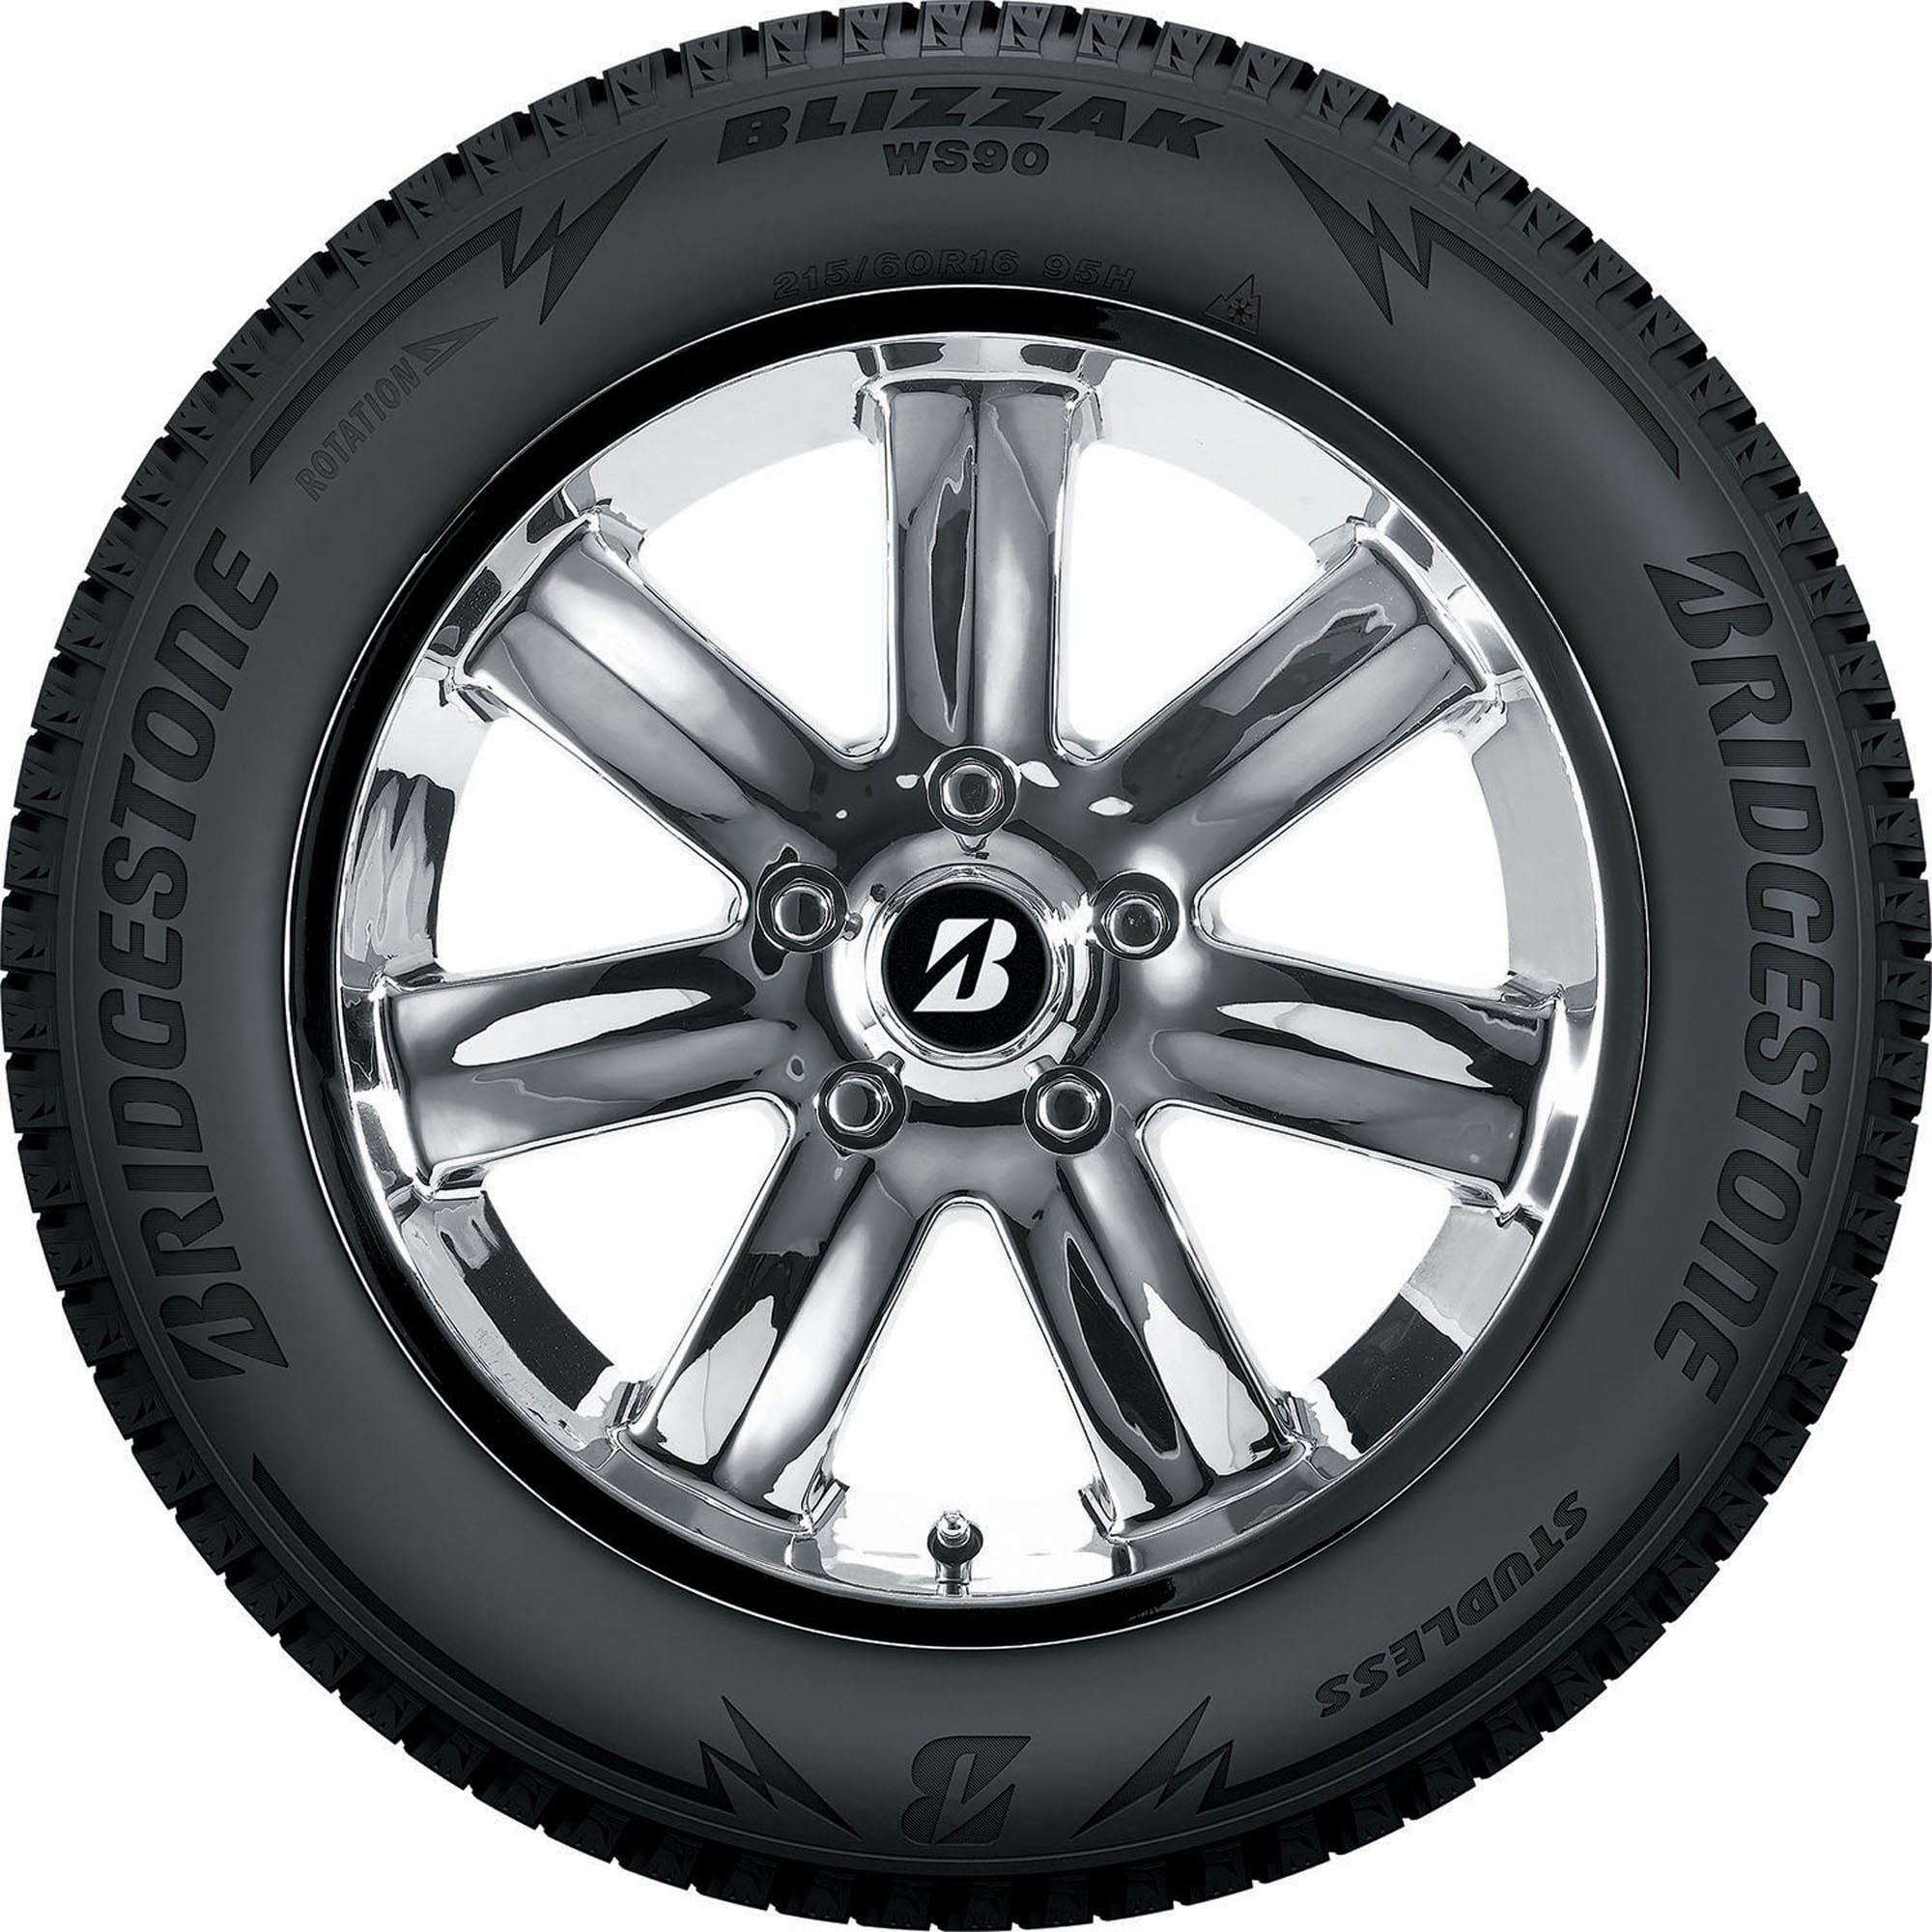 Bridgestone Blizzak WS90 Winter 245/40R18 97H XL Passenger Tire